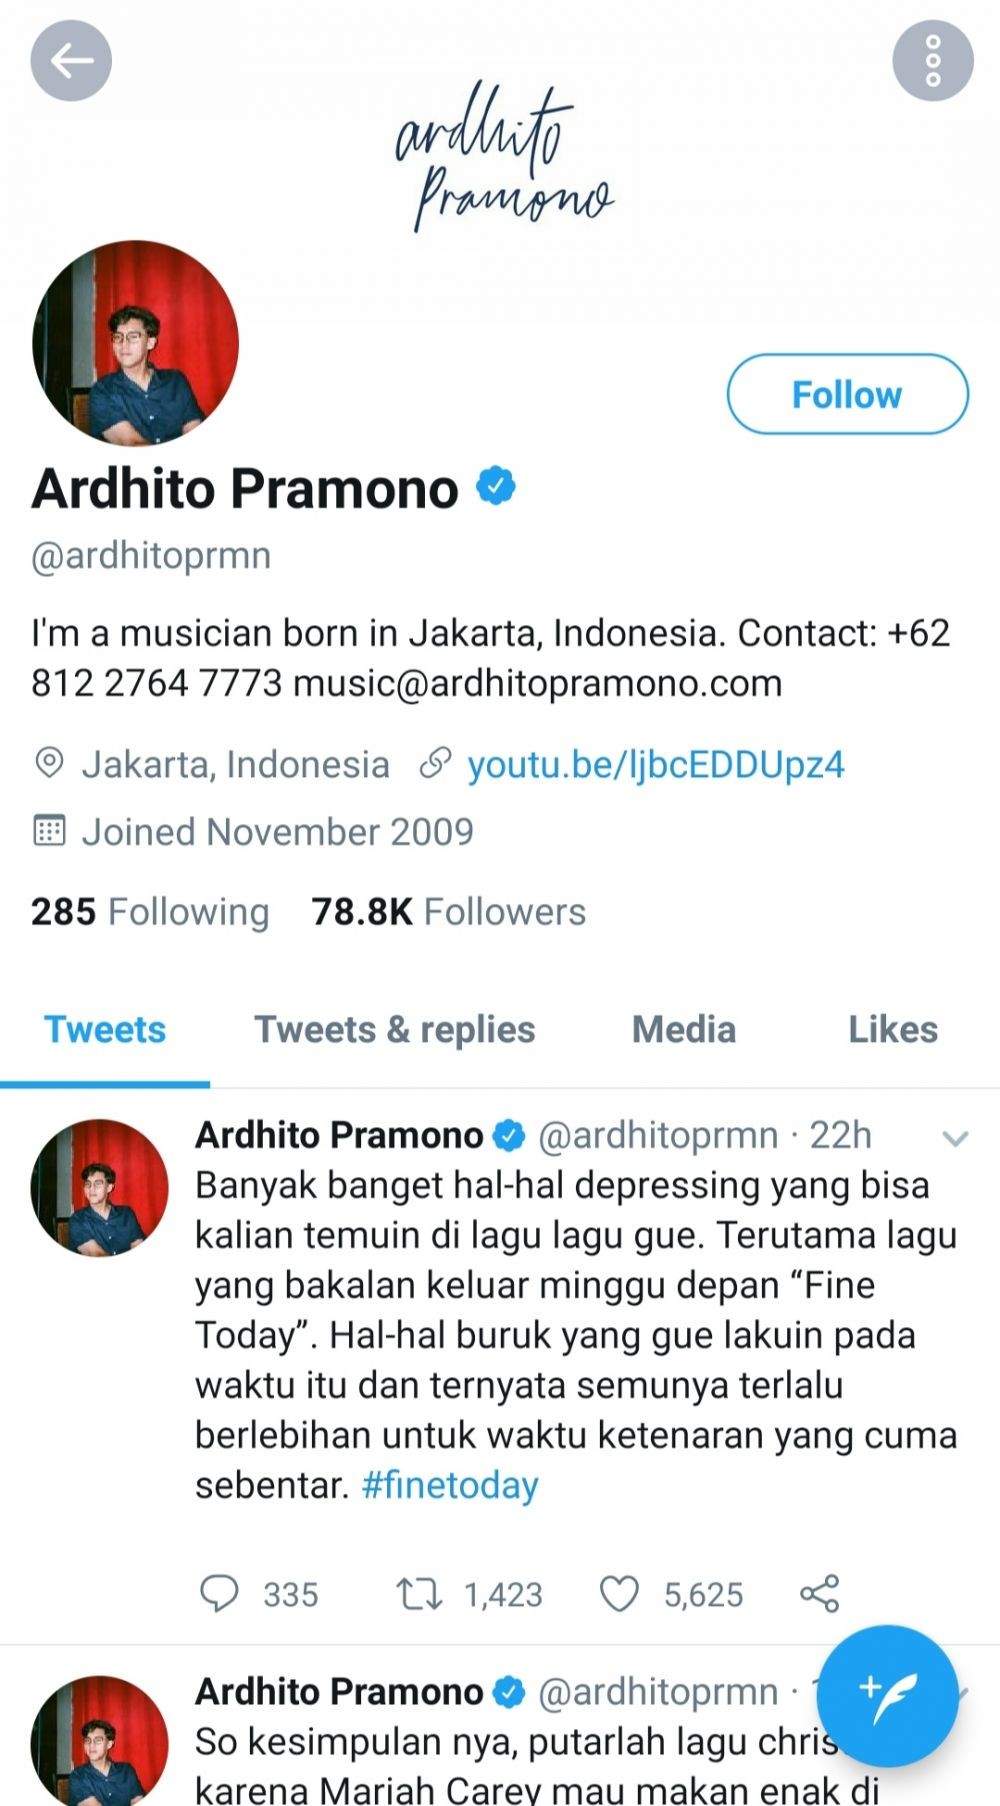 Curhat di Twitter, Ardhito Pramono Banjir Dukungan Netizen